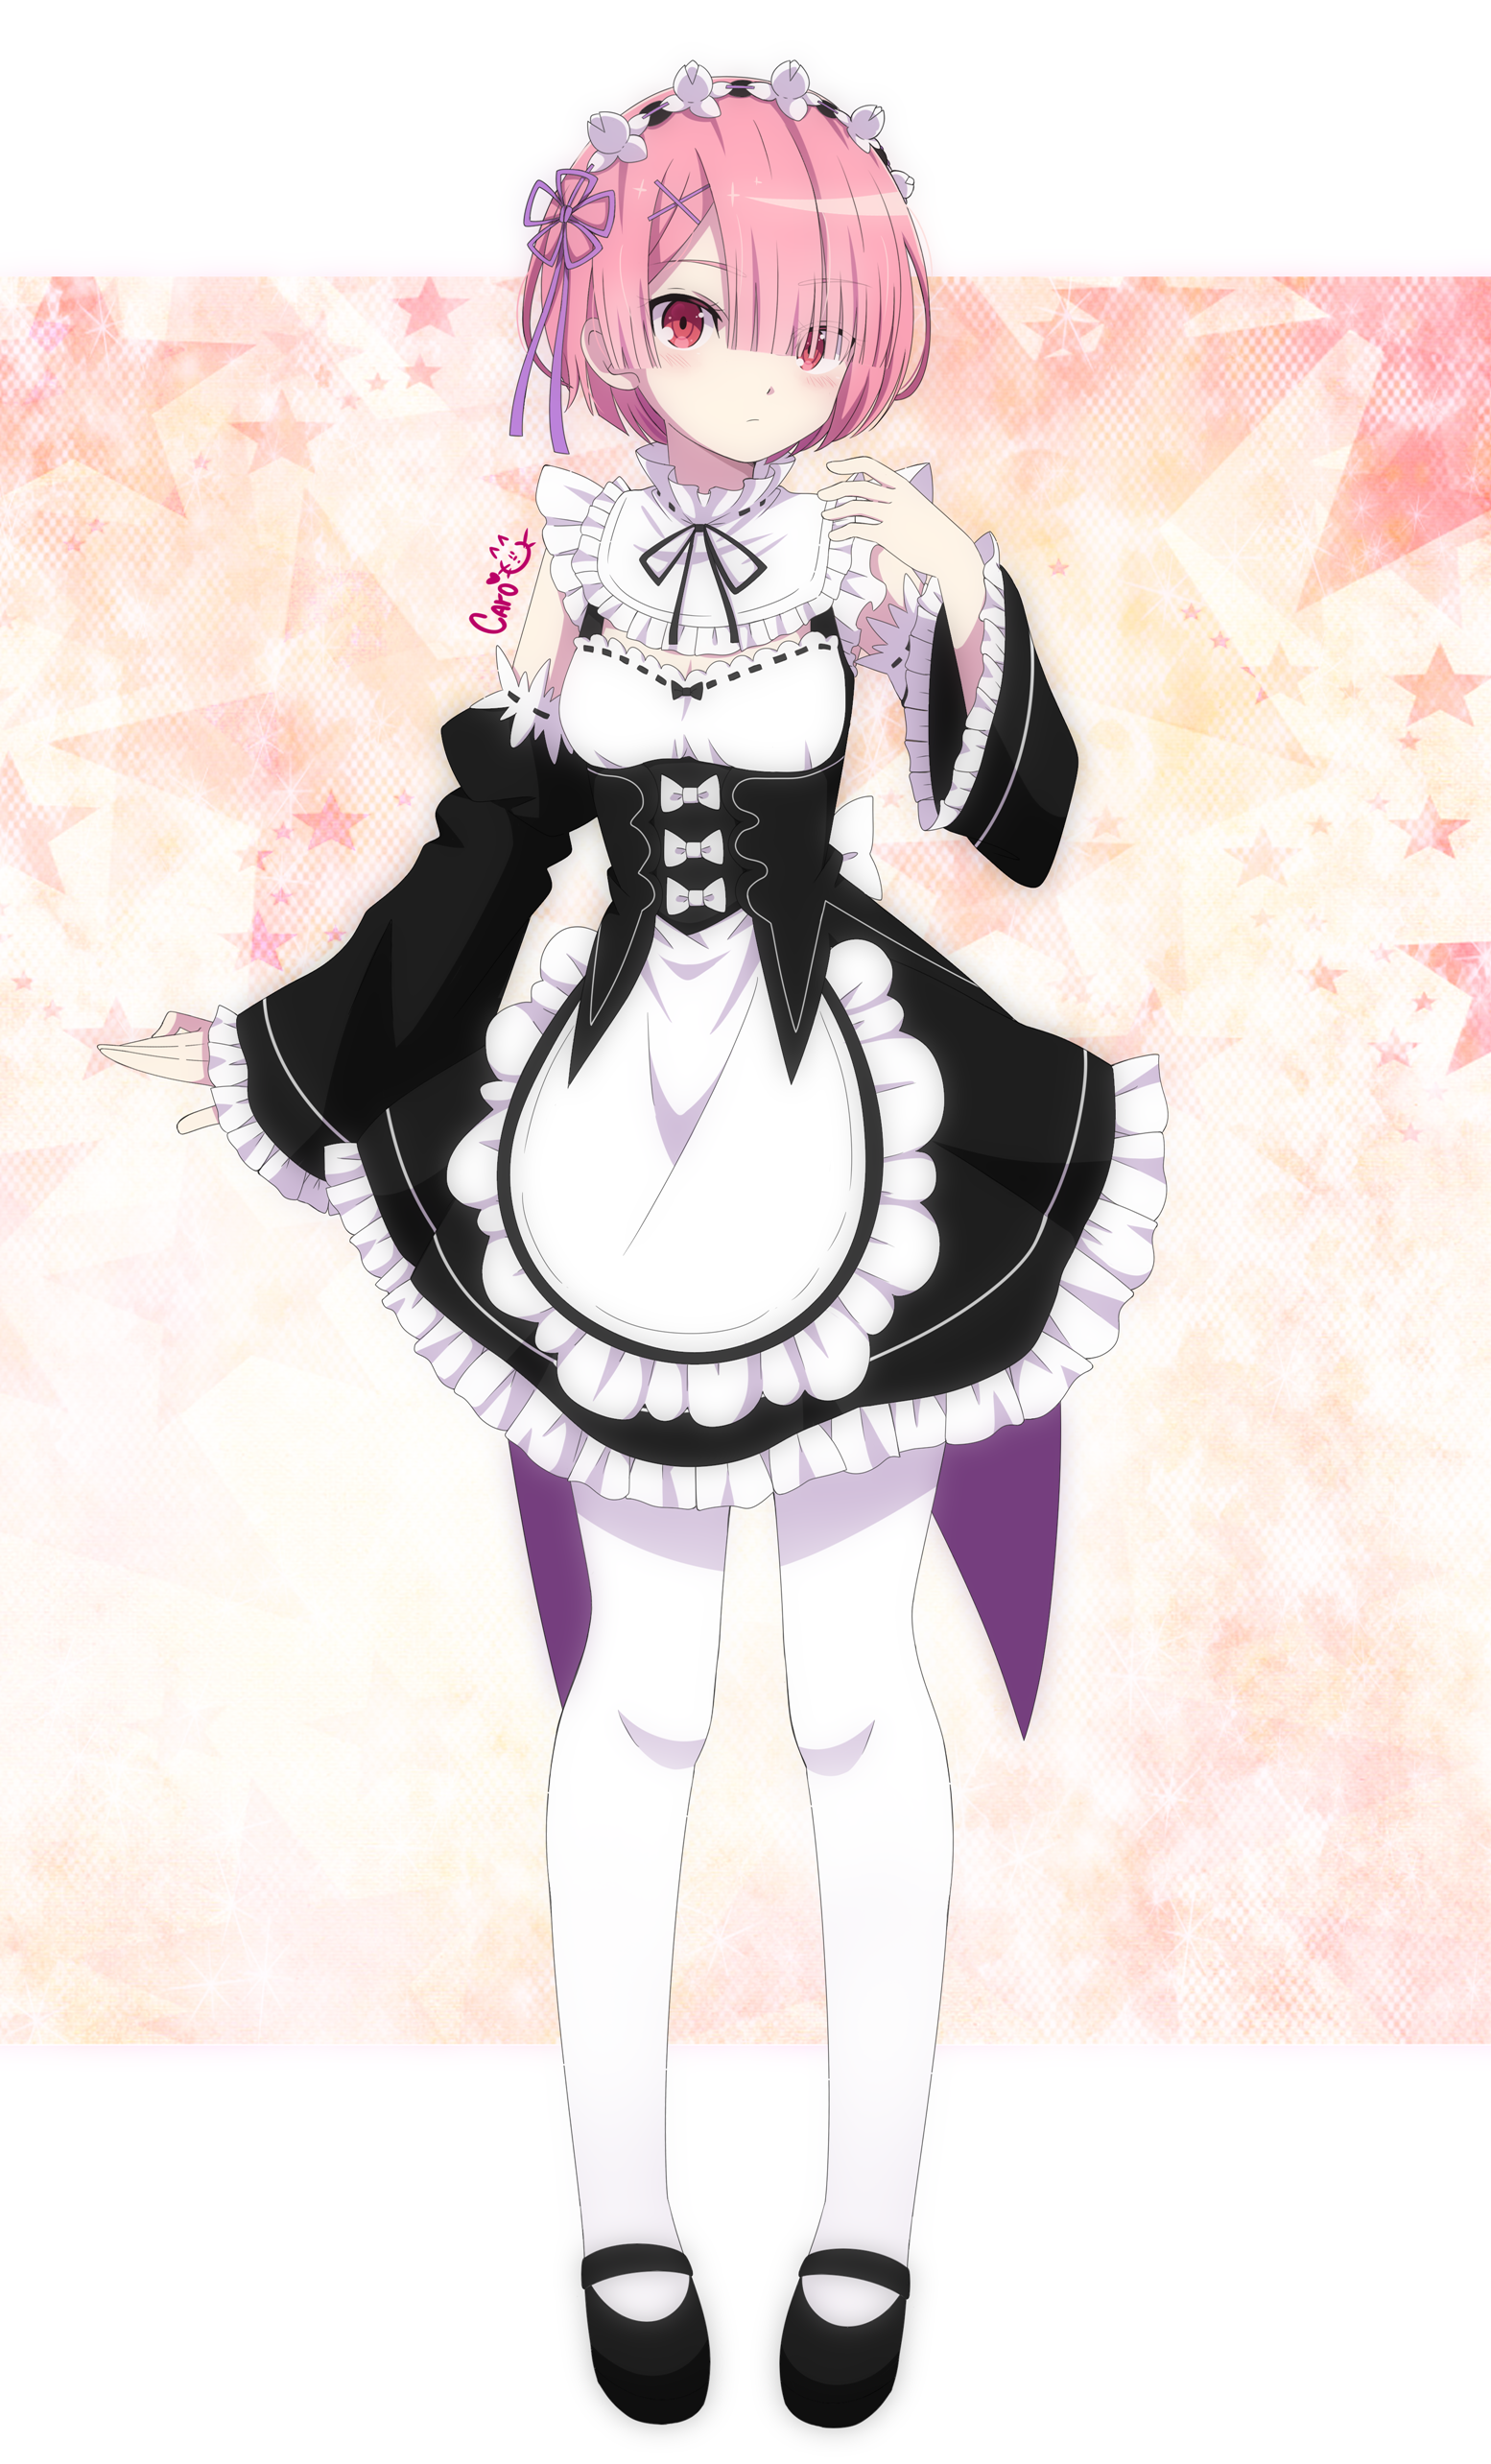 Anime 1554x2568 anime anime girls Re:Zero Kara Hajimeru Isekai Seikatsu Ram (Re: Zero) pink hair maid maid outfit